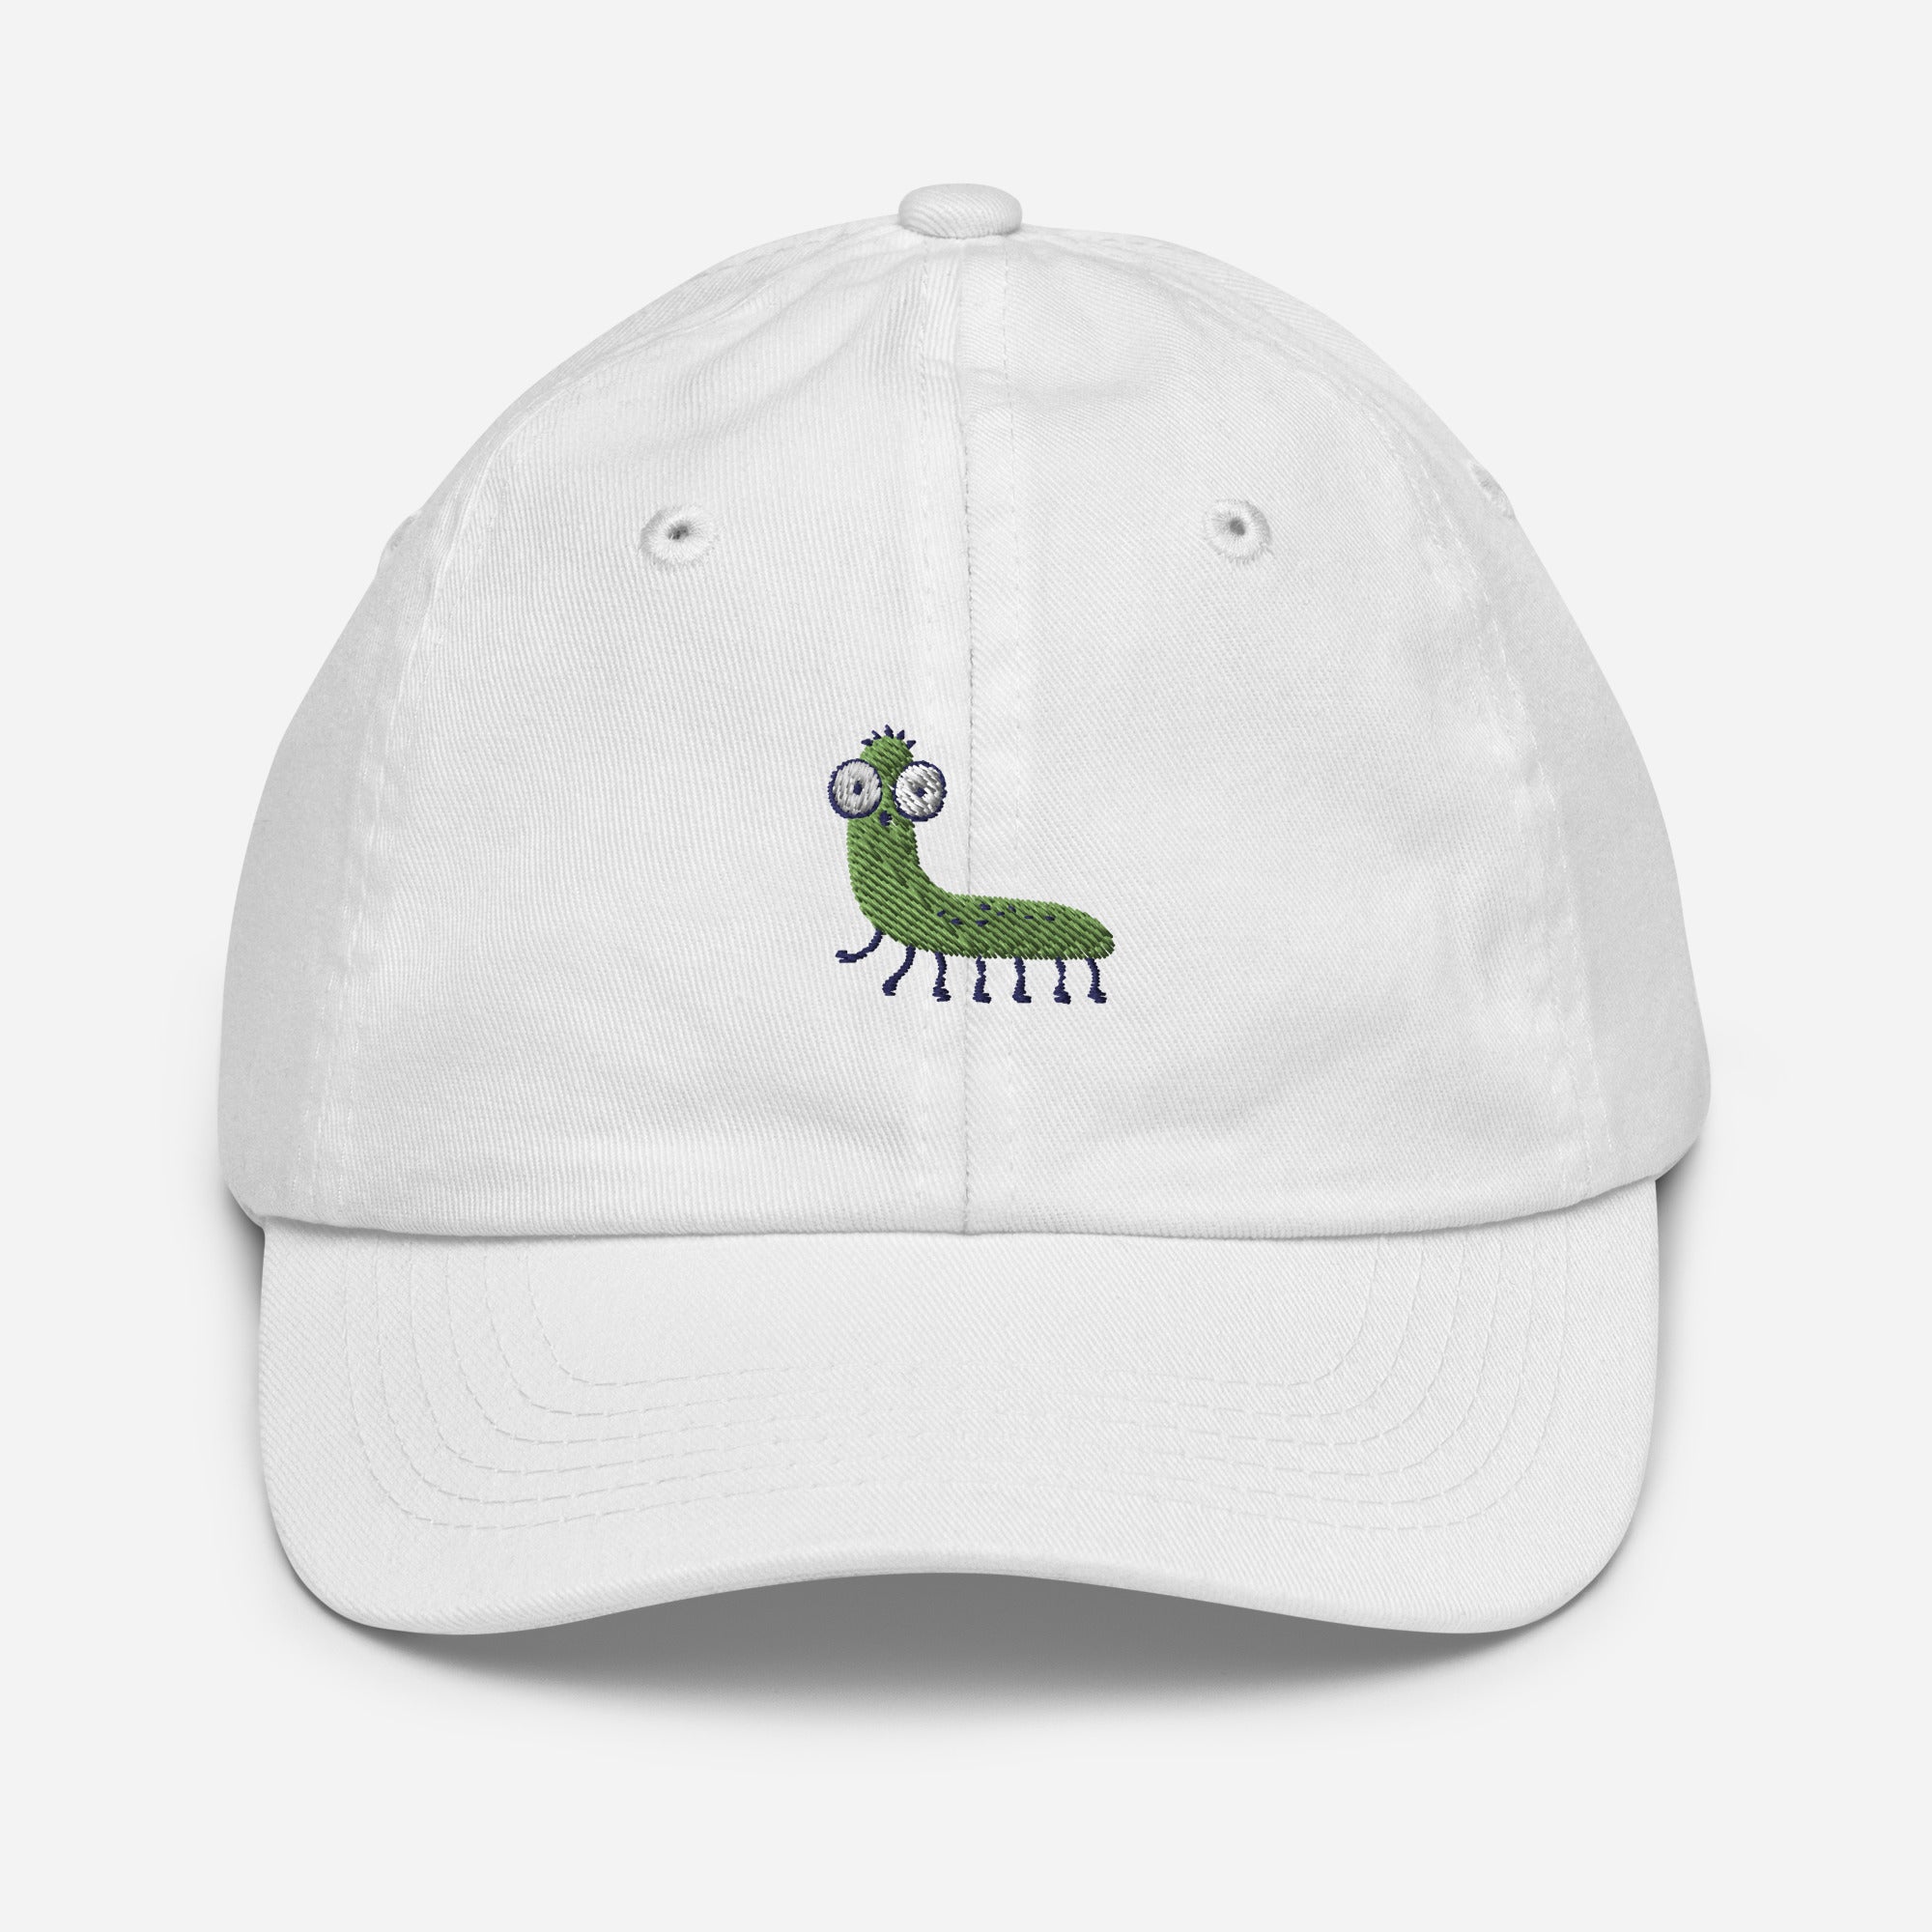 Cute kids hat with a caterpillar